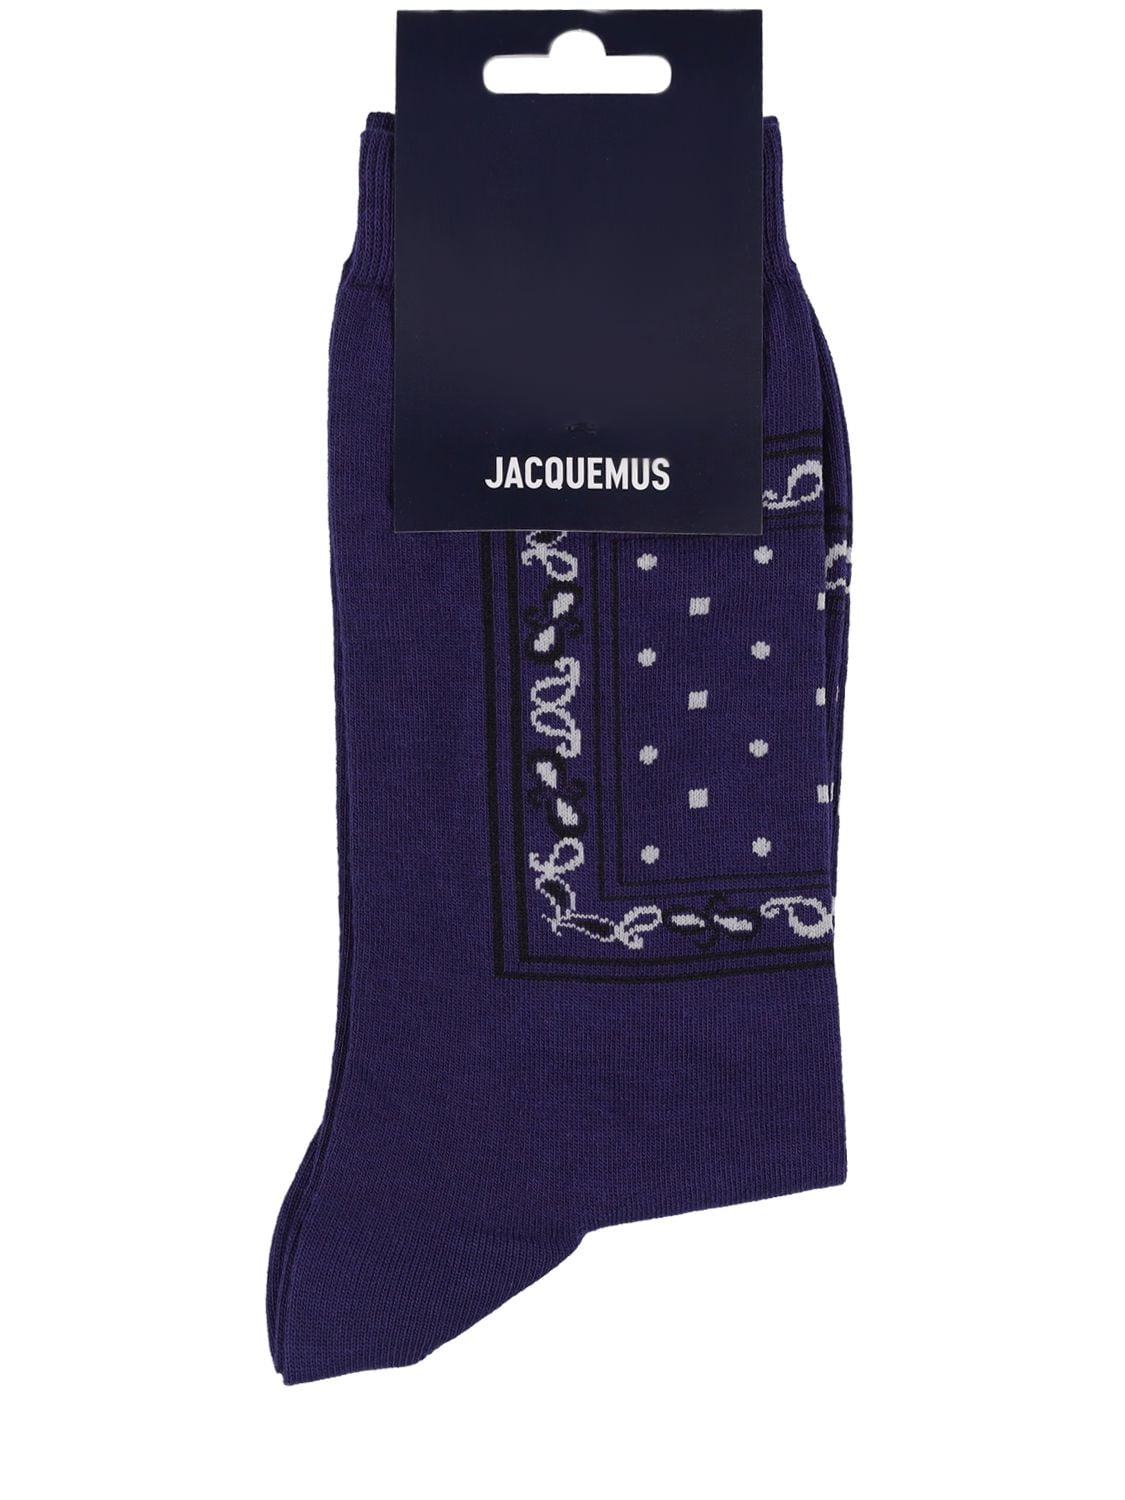 Jacquemus Les Chaussettes Bandana Socks In Navy Paisley Print